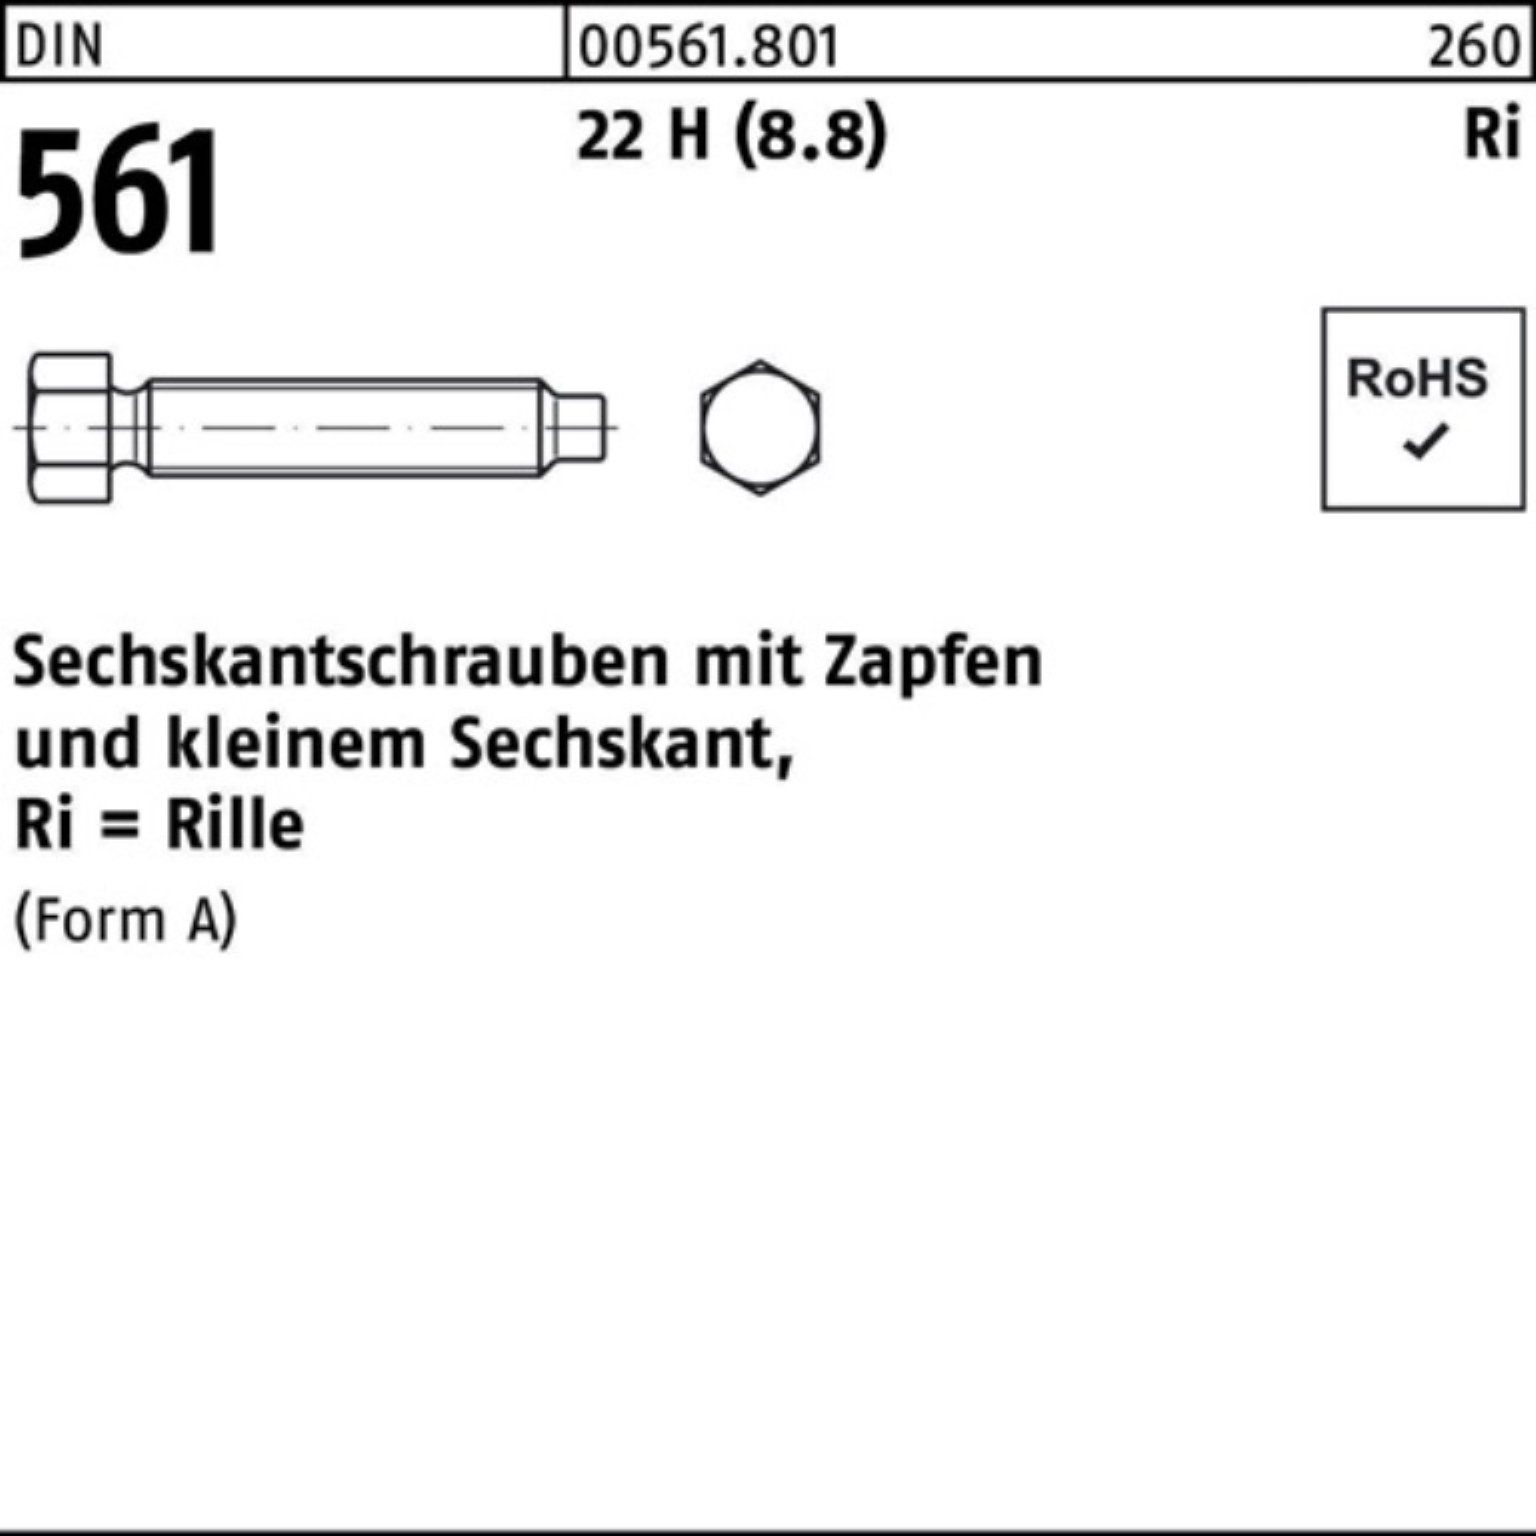 Reyher Sechskantschraube 100er AM 8x 16 H 22 Pack (8.8) Sechskantschraube DIN St 561 Zapfen 100